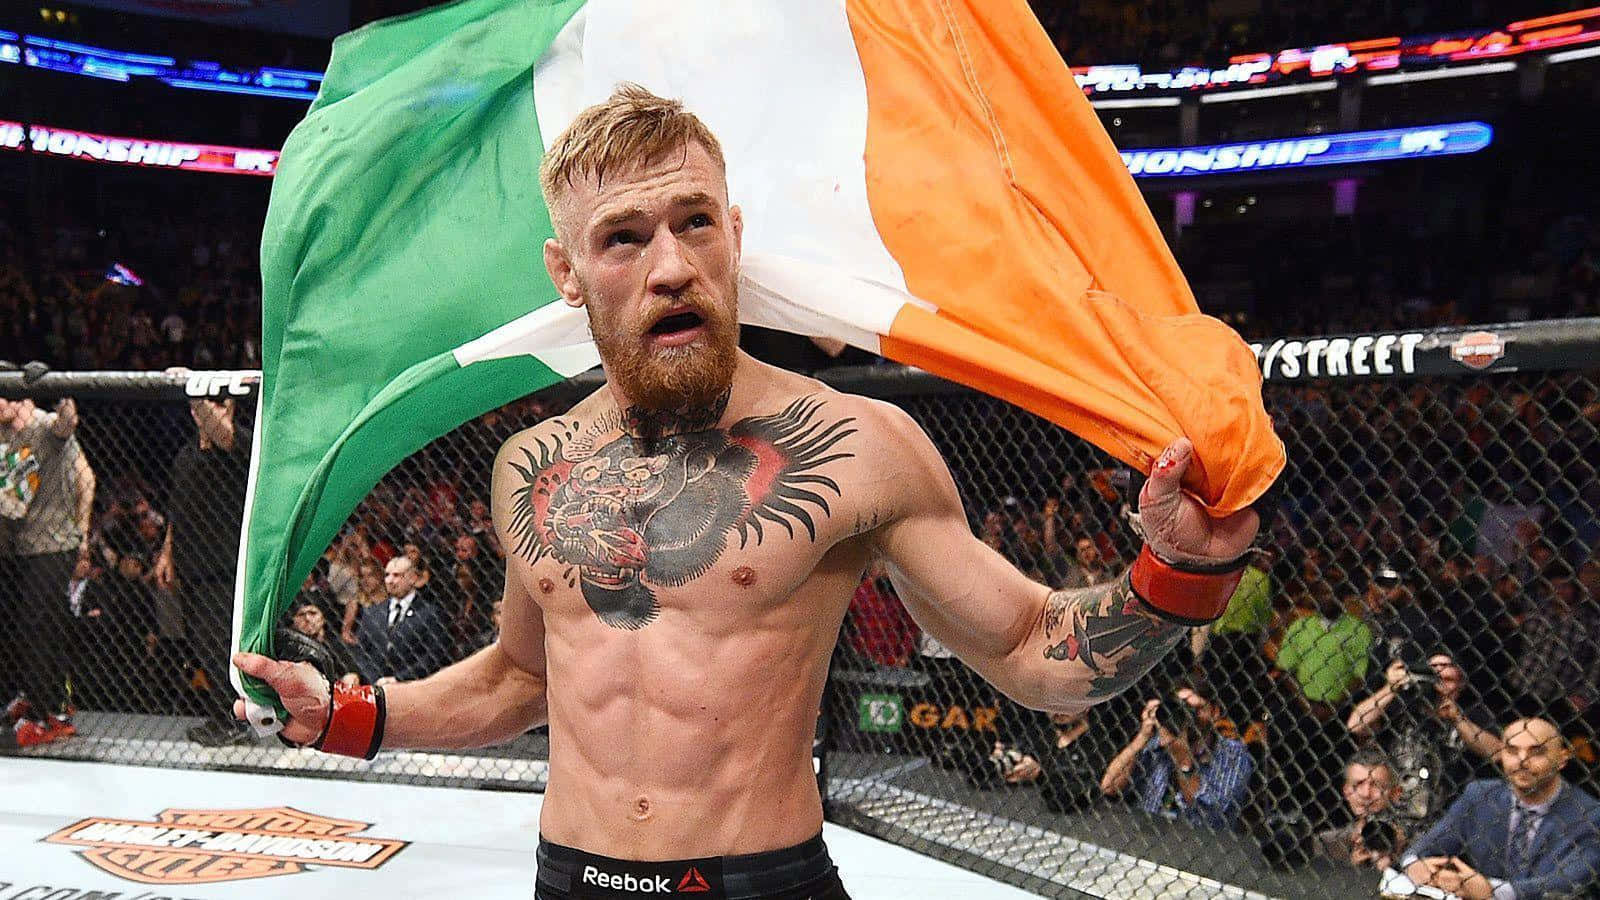 A Man With Tattoos Holding An Irish Flag